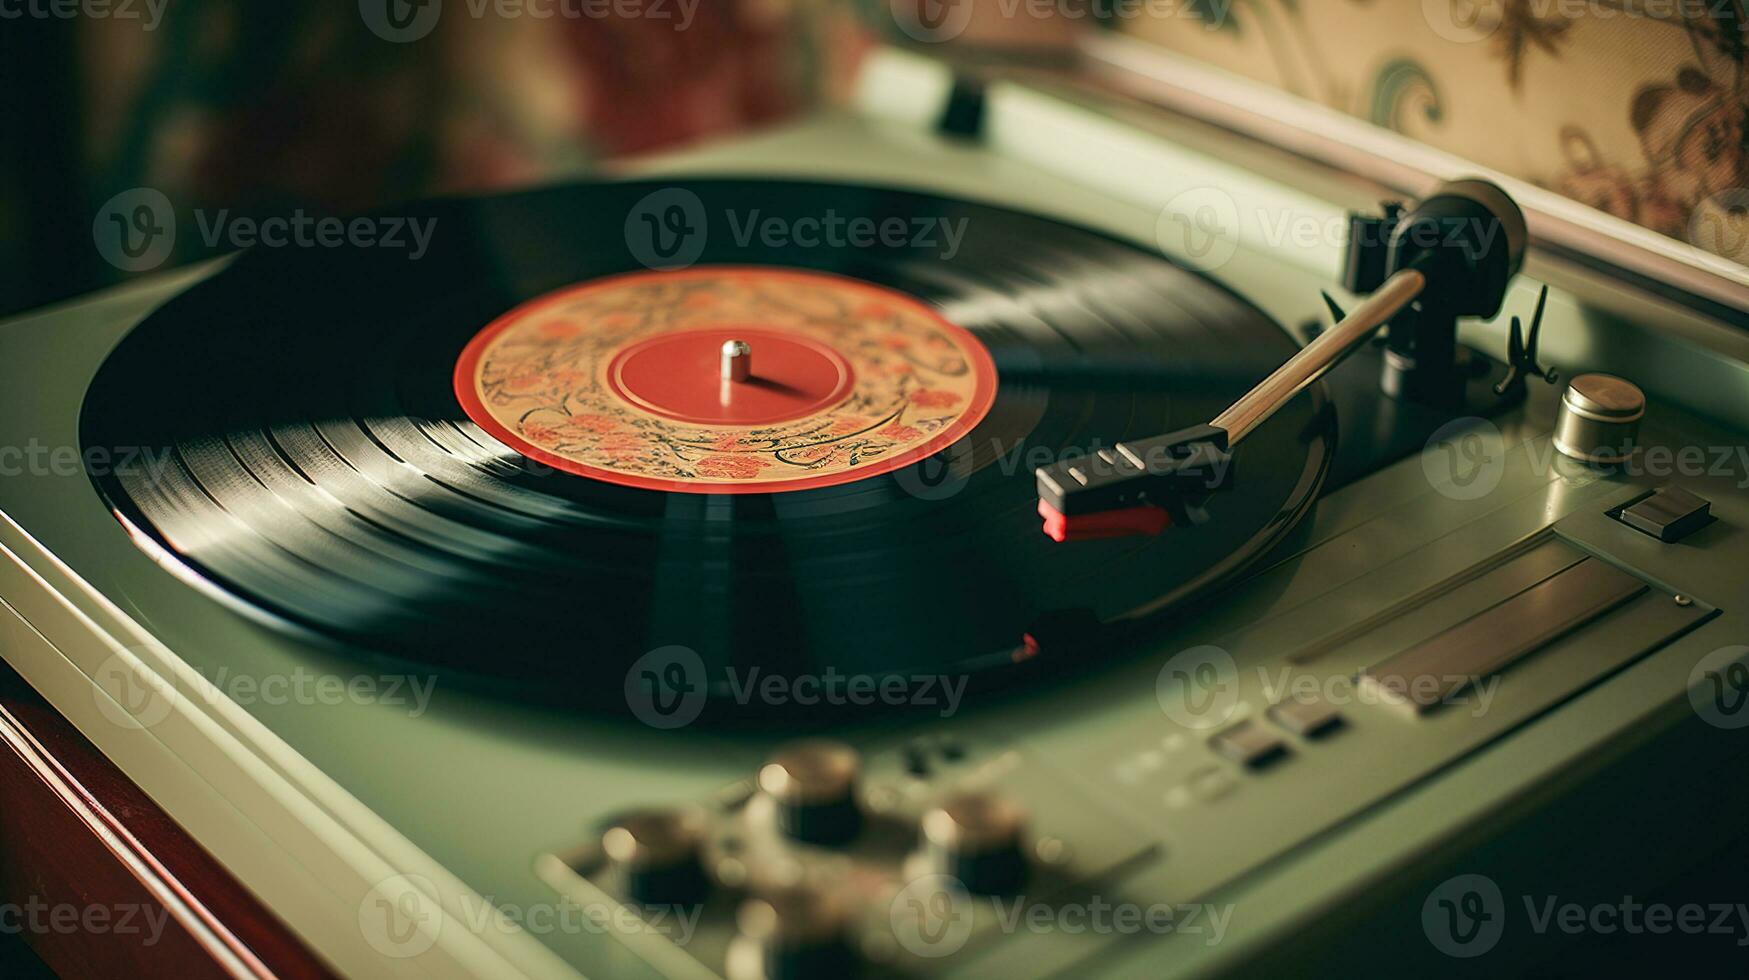 AI generated Generative AI, nostalgic retro vinyl recorder, vintage turntable player, muted colors, aesthetic photo